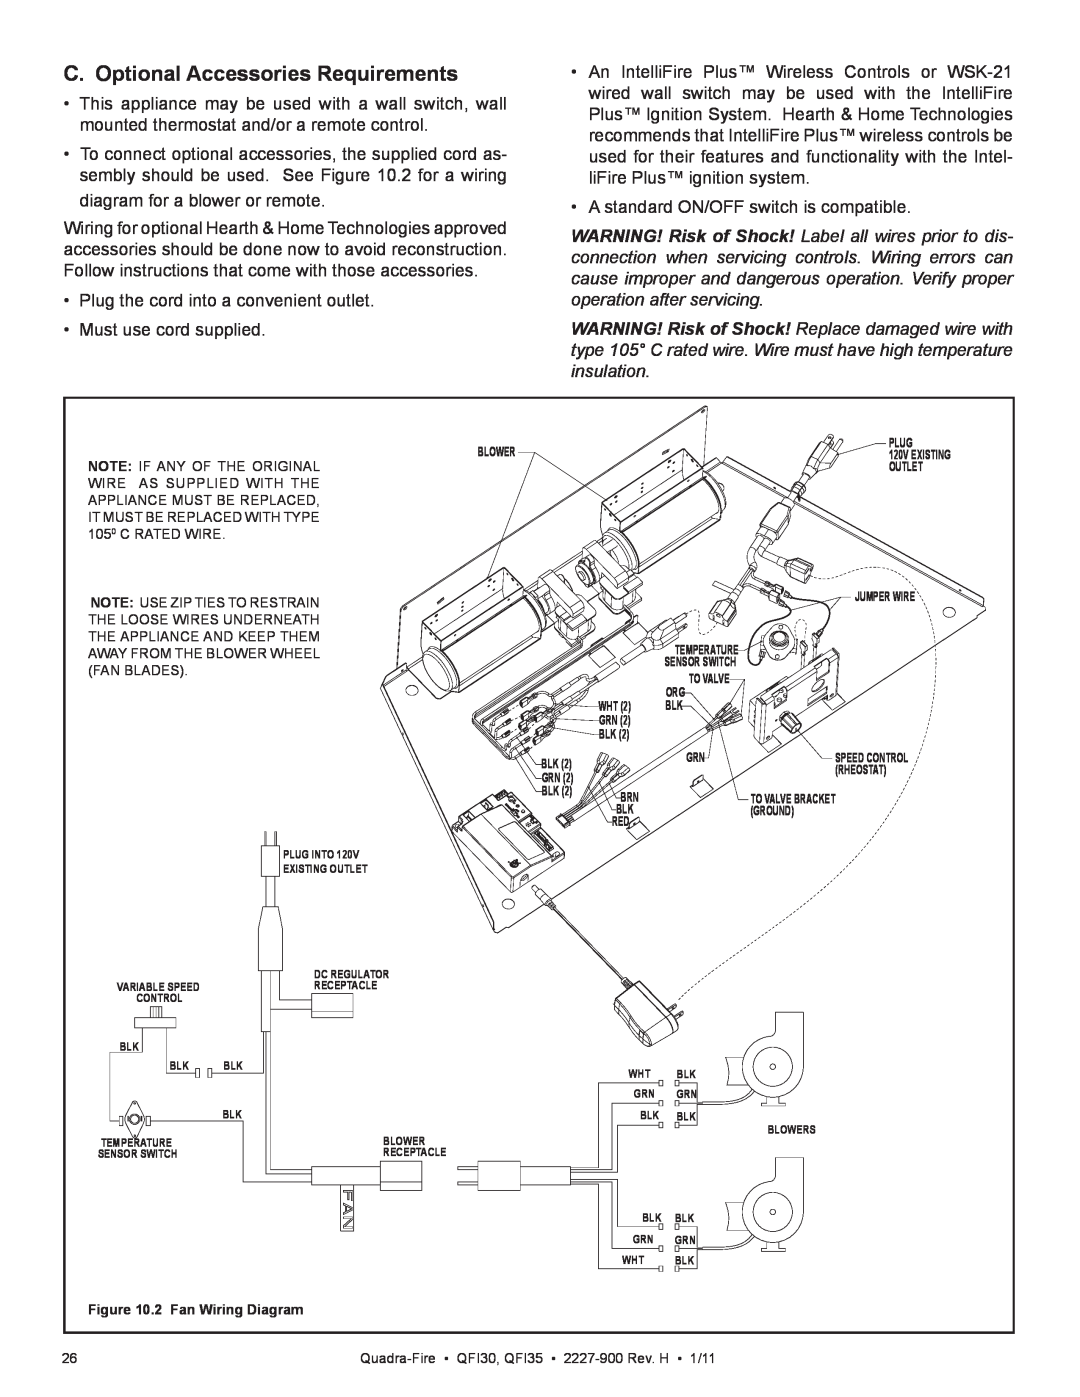 Quadra-Fire QF130 owner manual C. Optional Accessories Requirements 